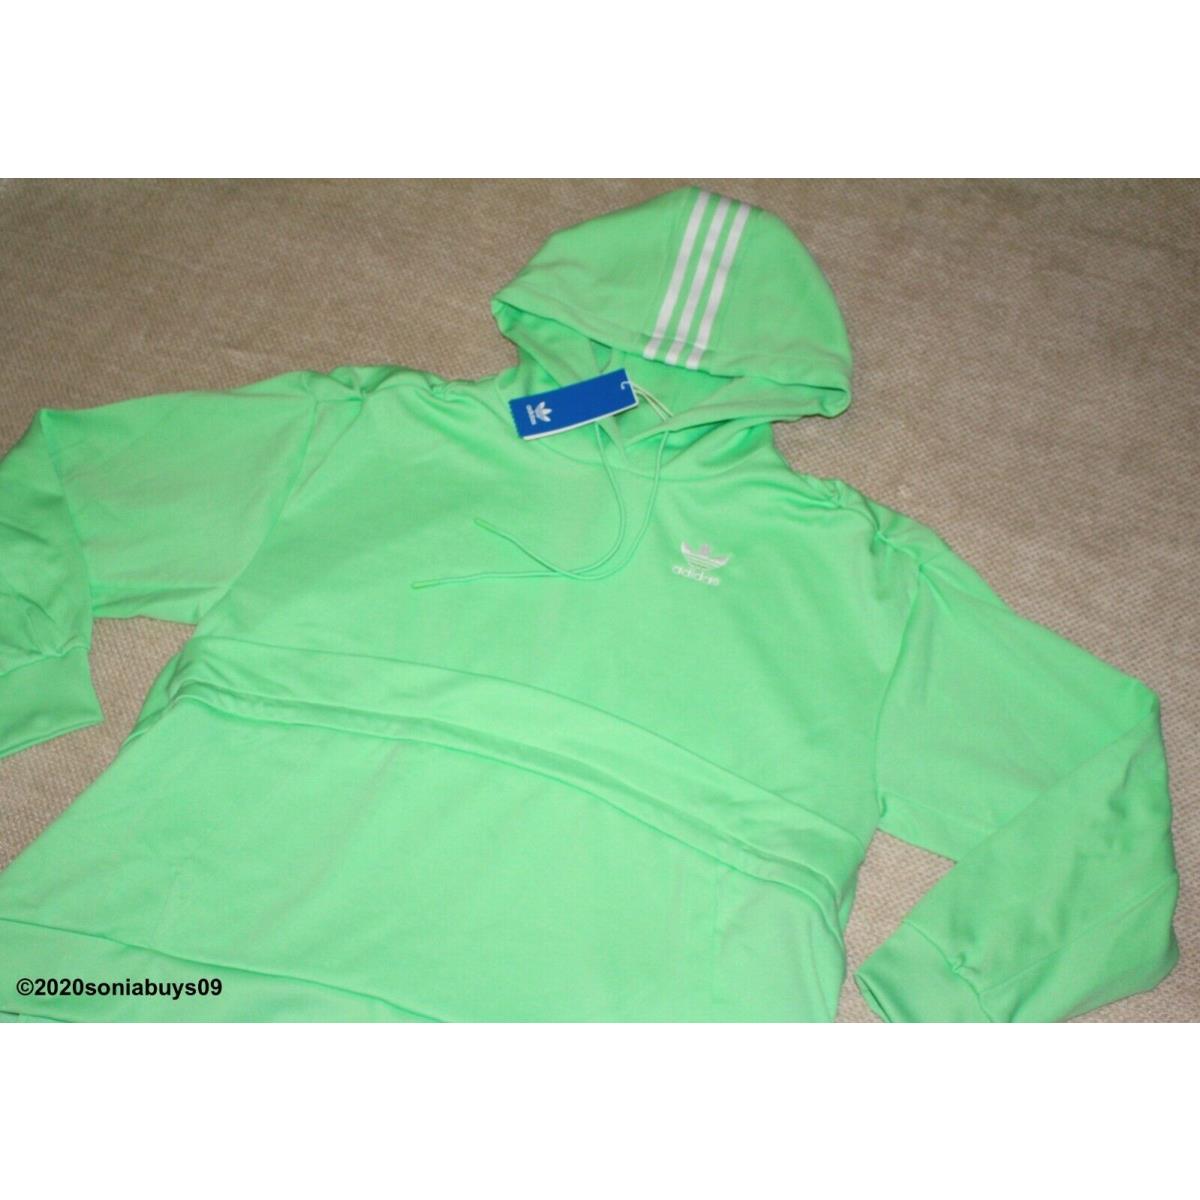 Adidas clothing  - Glow Mint Green 1